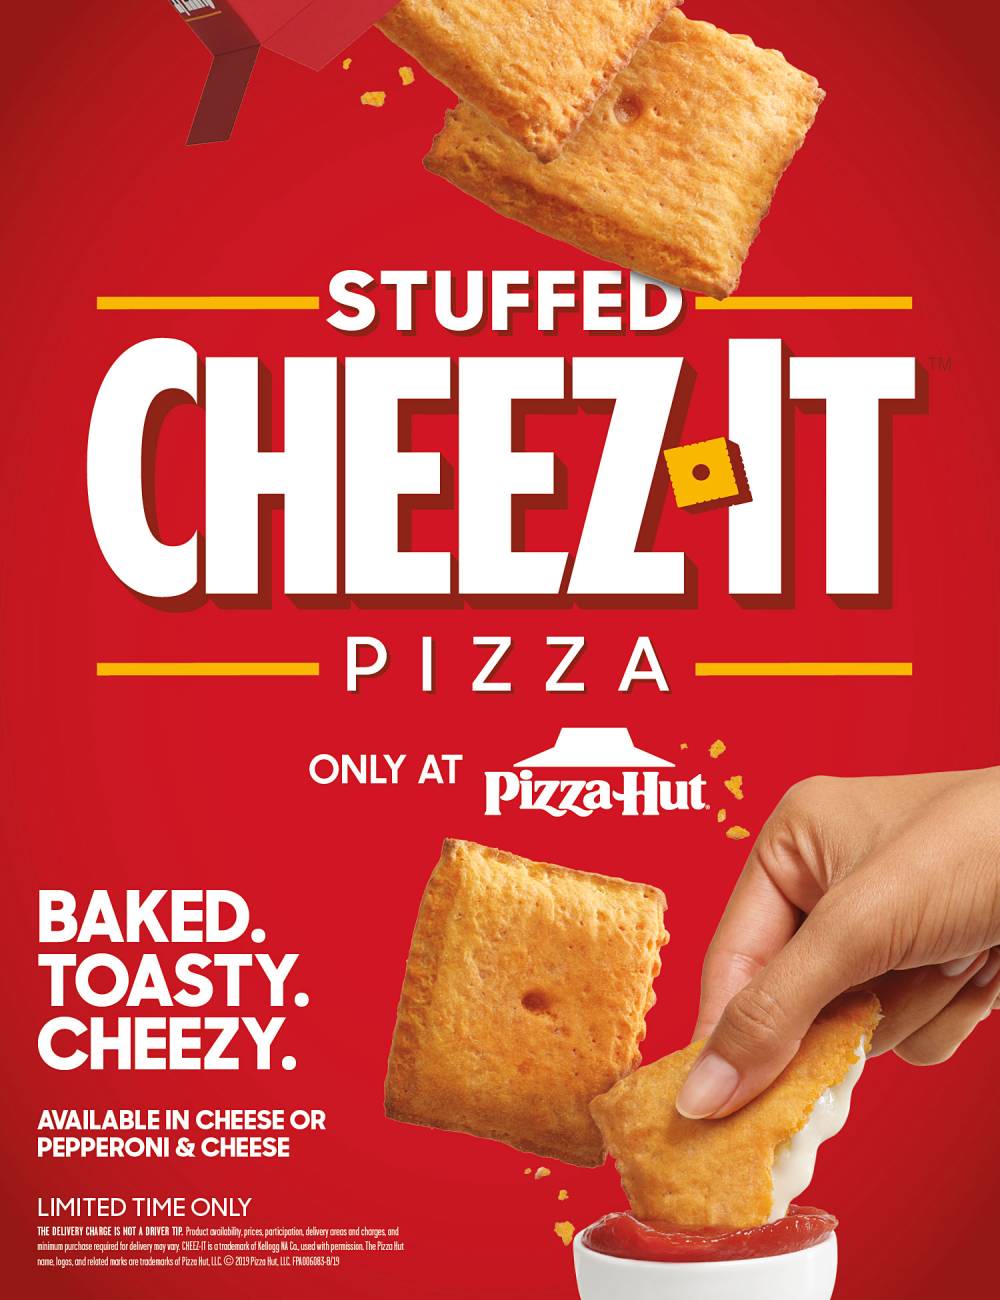 Pizza Hut Cheez-Its Launch New Stuffed Cheez-It Pizza